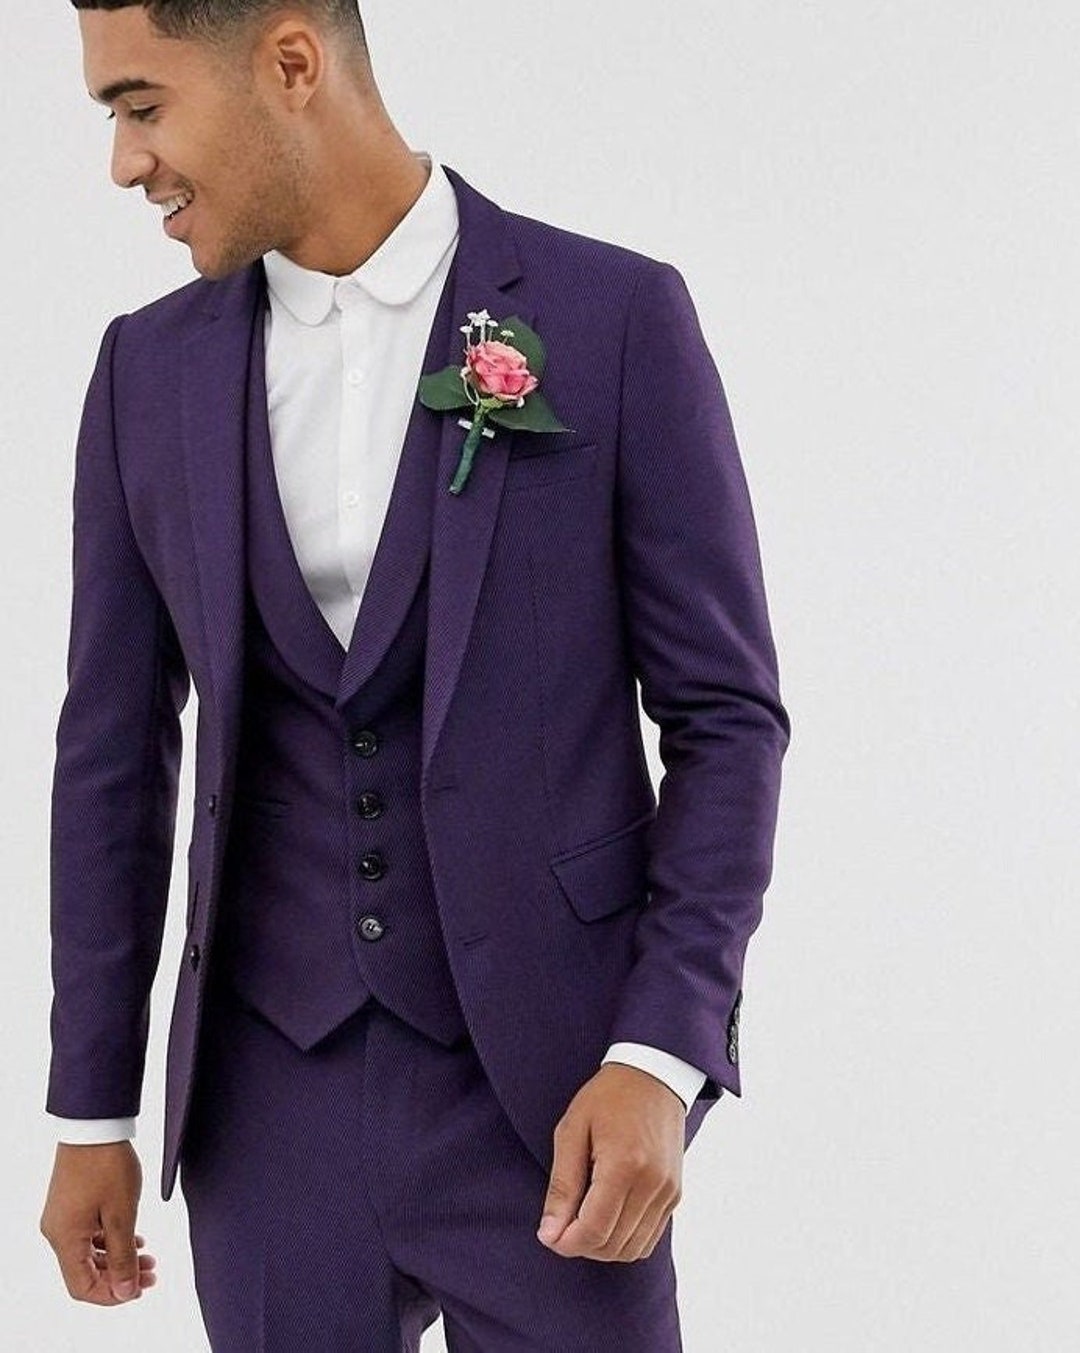 Share 83+ purple wedding suit